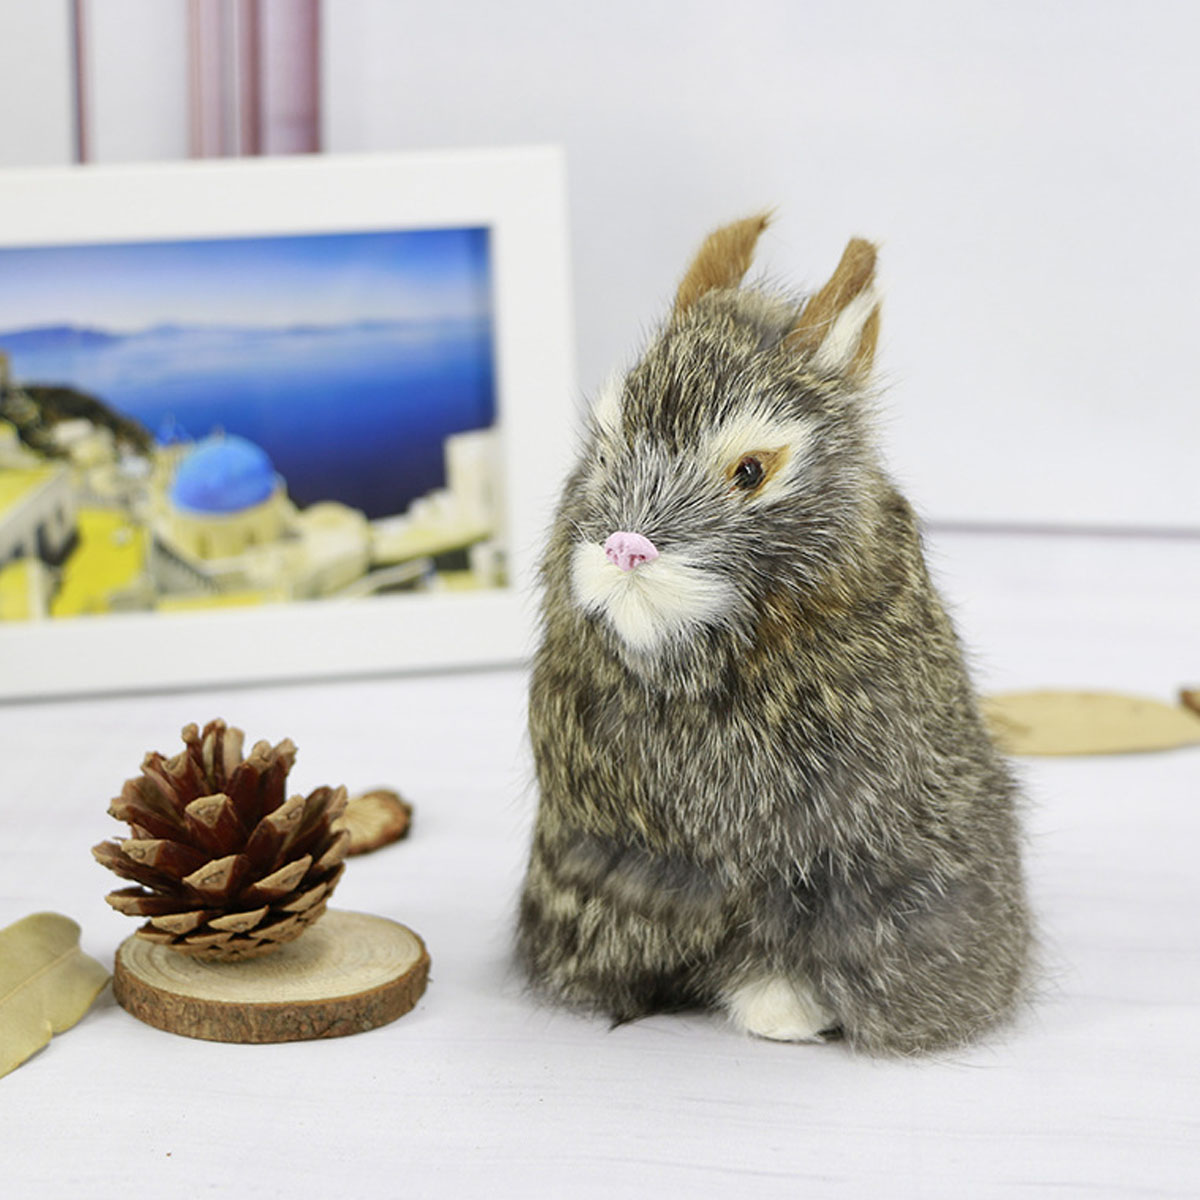 GrayYellowBrownWhite-Rabbits-Handmade-Easter-Bunnies-Home-Decorations-Desktop-Ornament-1452976-7